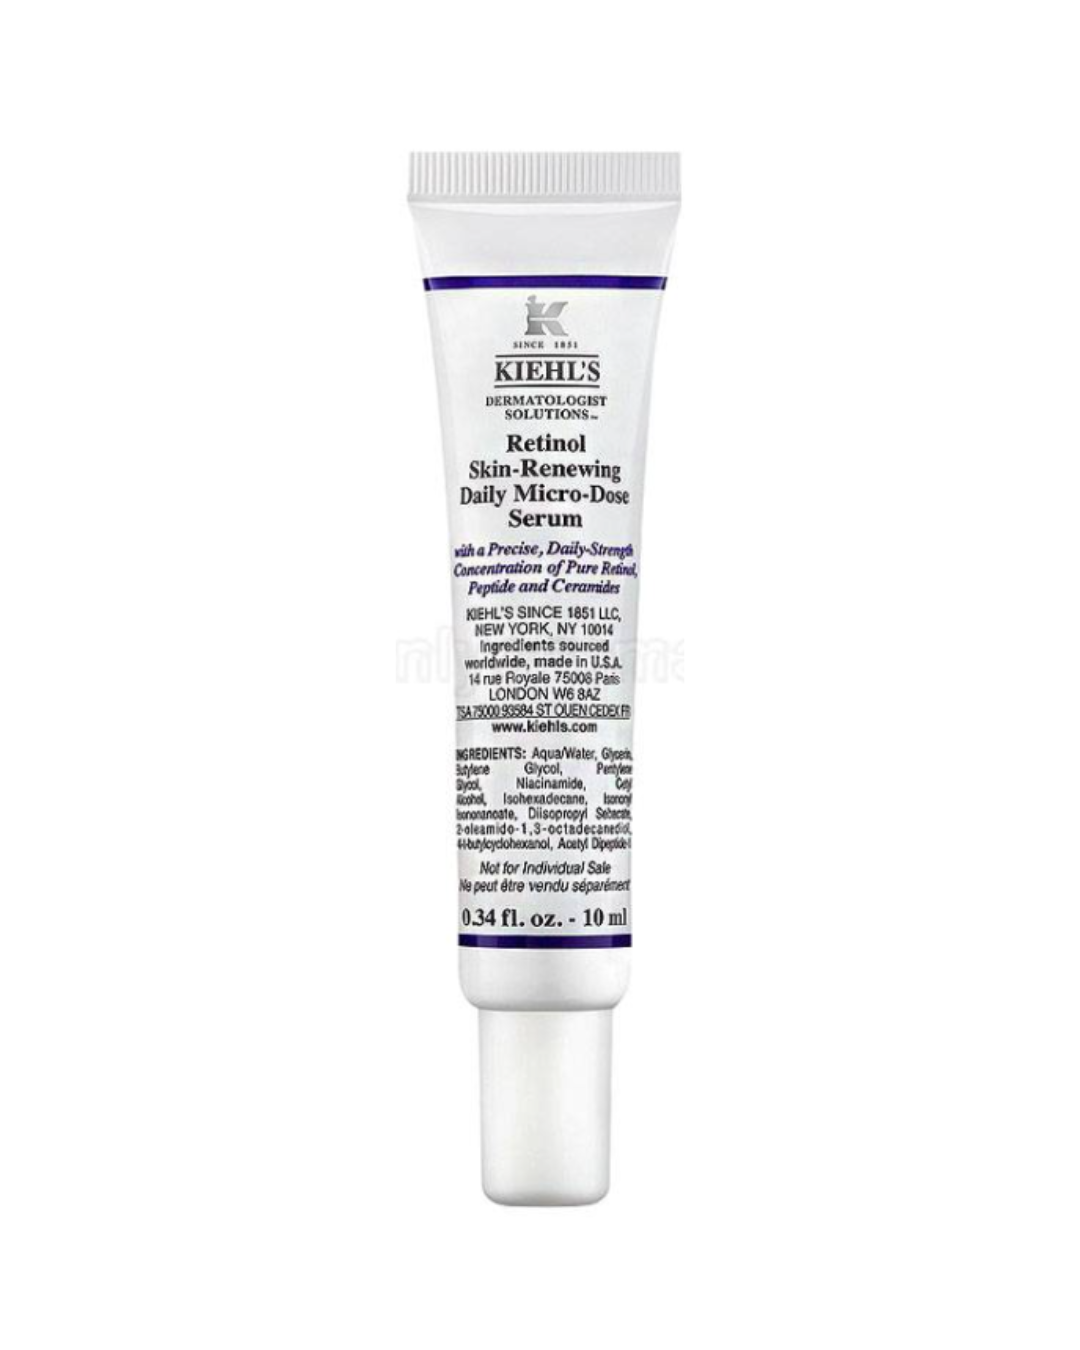 Retinol Skin-Renewing Daily Micro-Dose Serum (10ml)